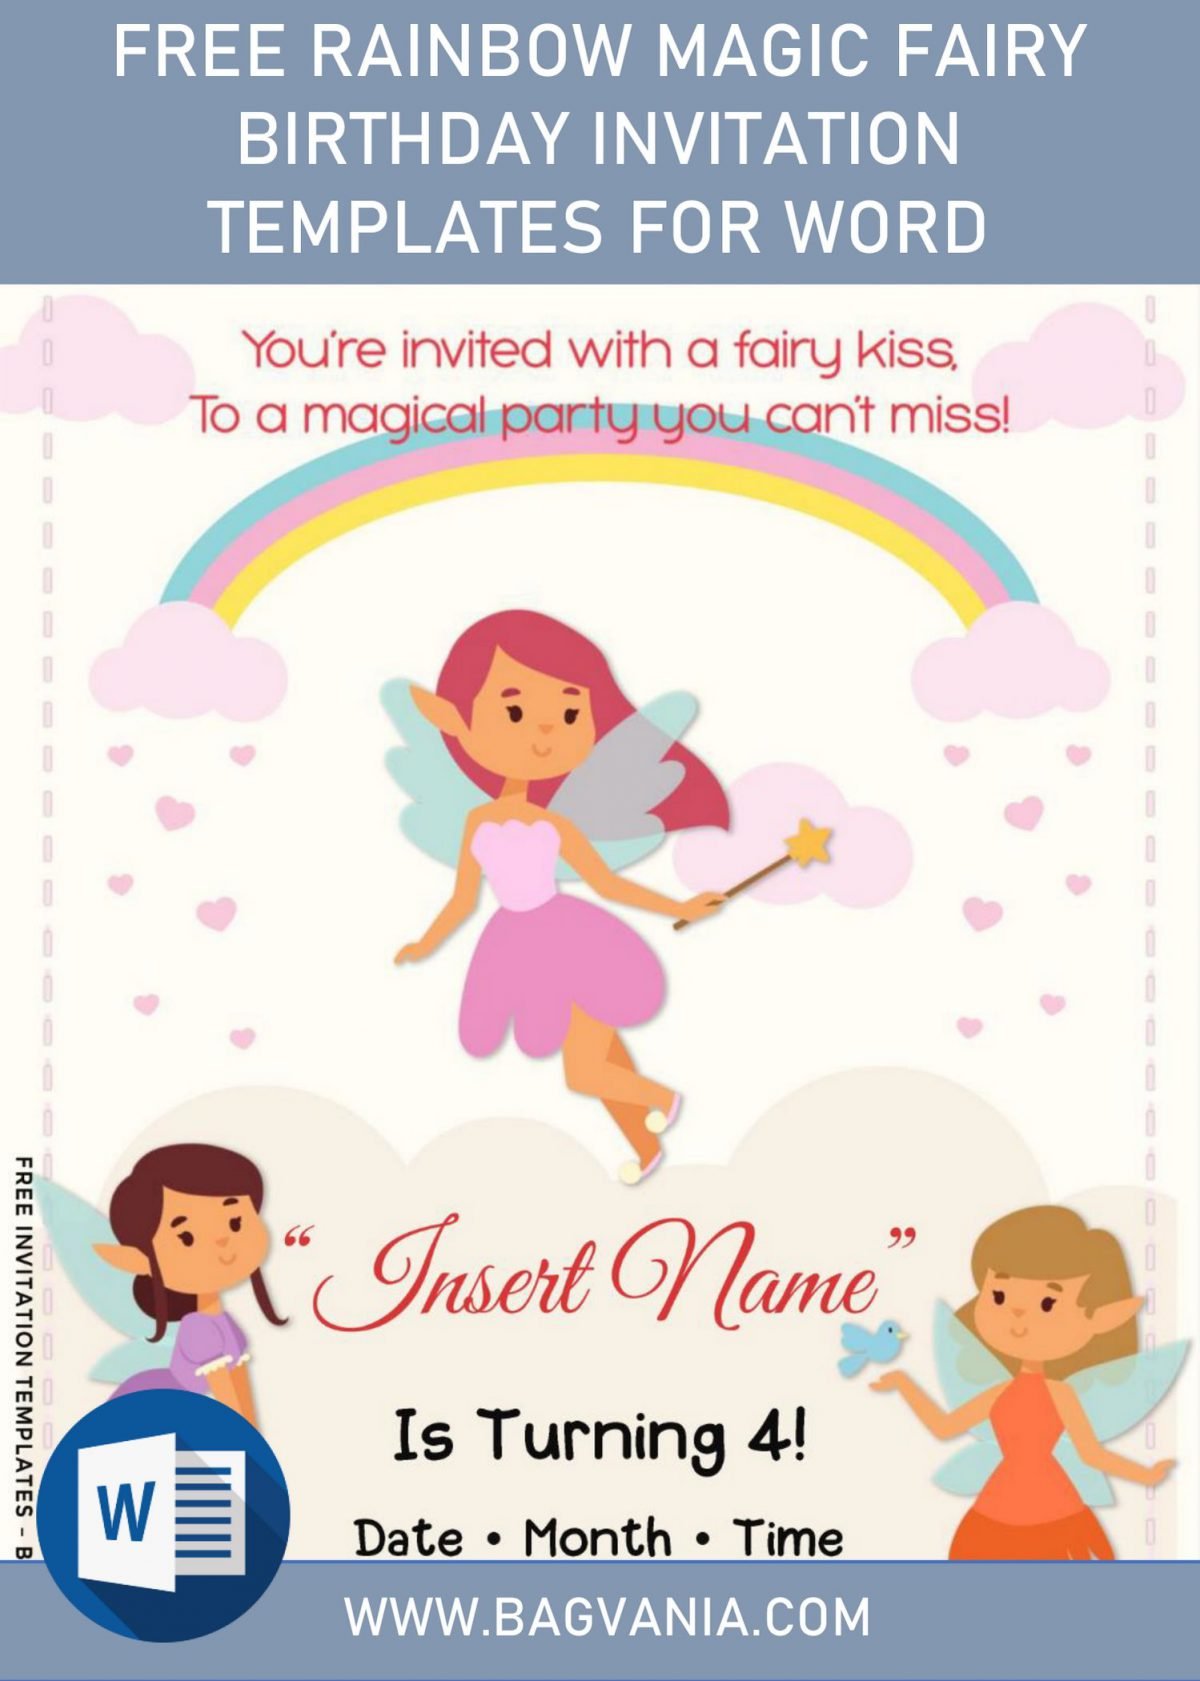 Free Rainbow Magic Fairy Birthday Invitation Templates For Word